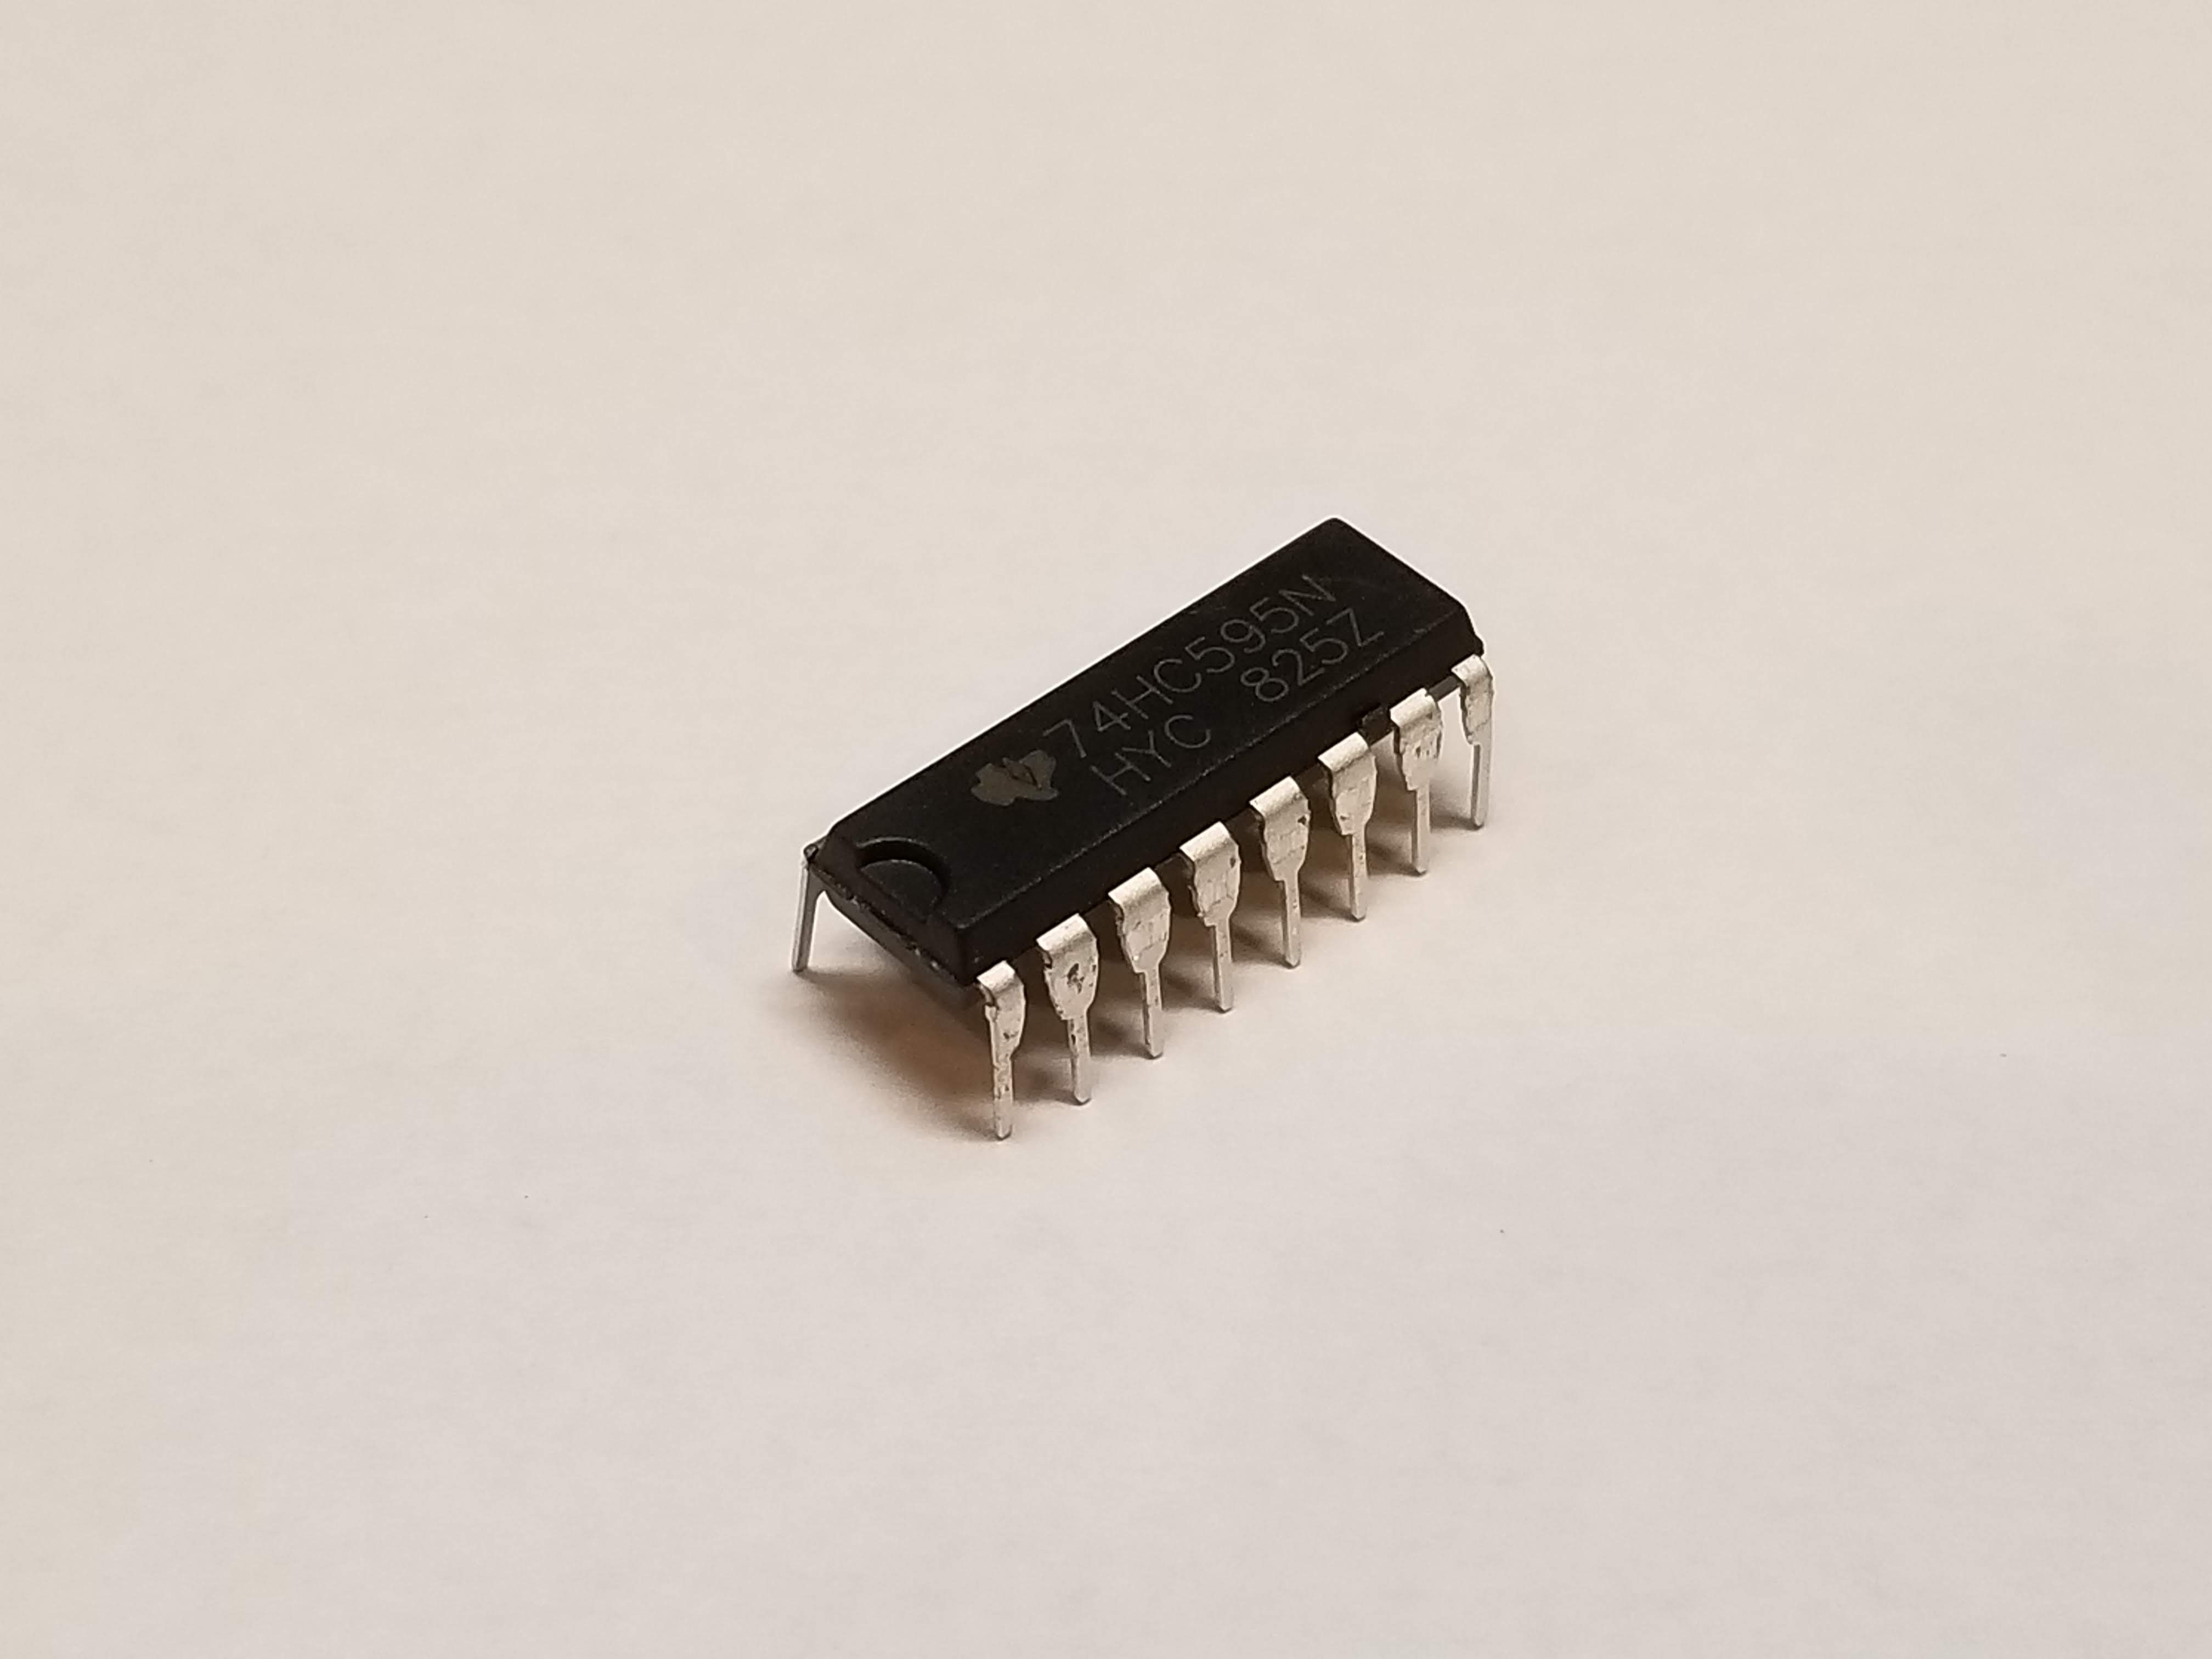 Picture of 74595 8-bit Shift Register